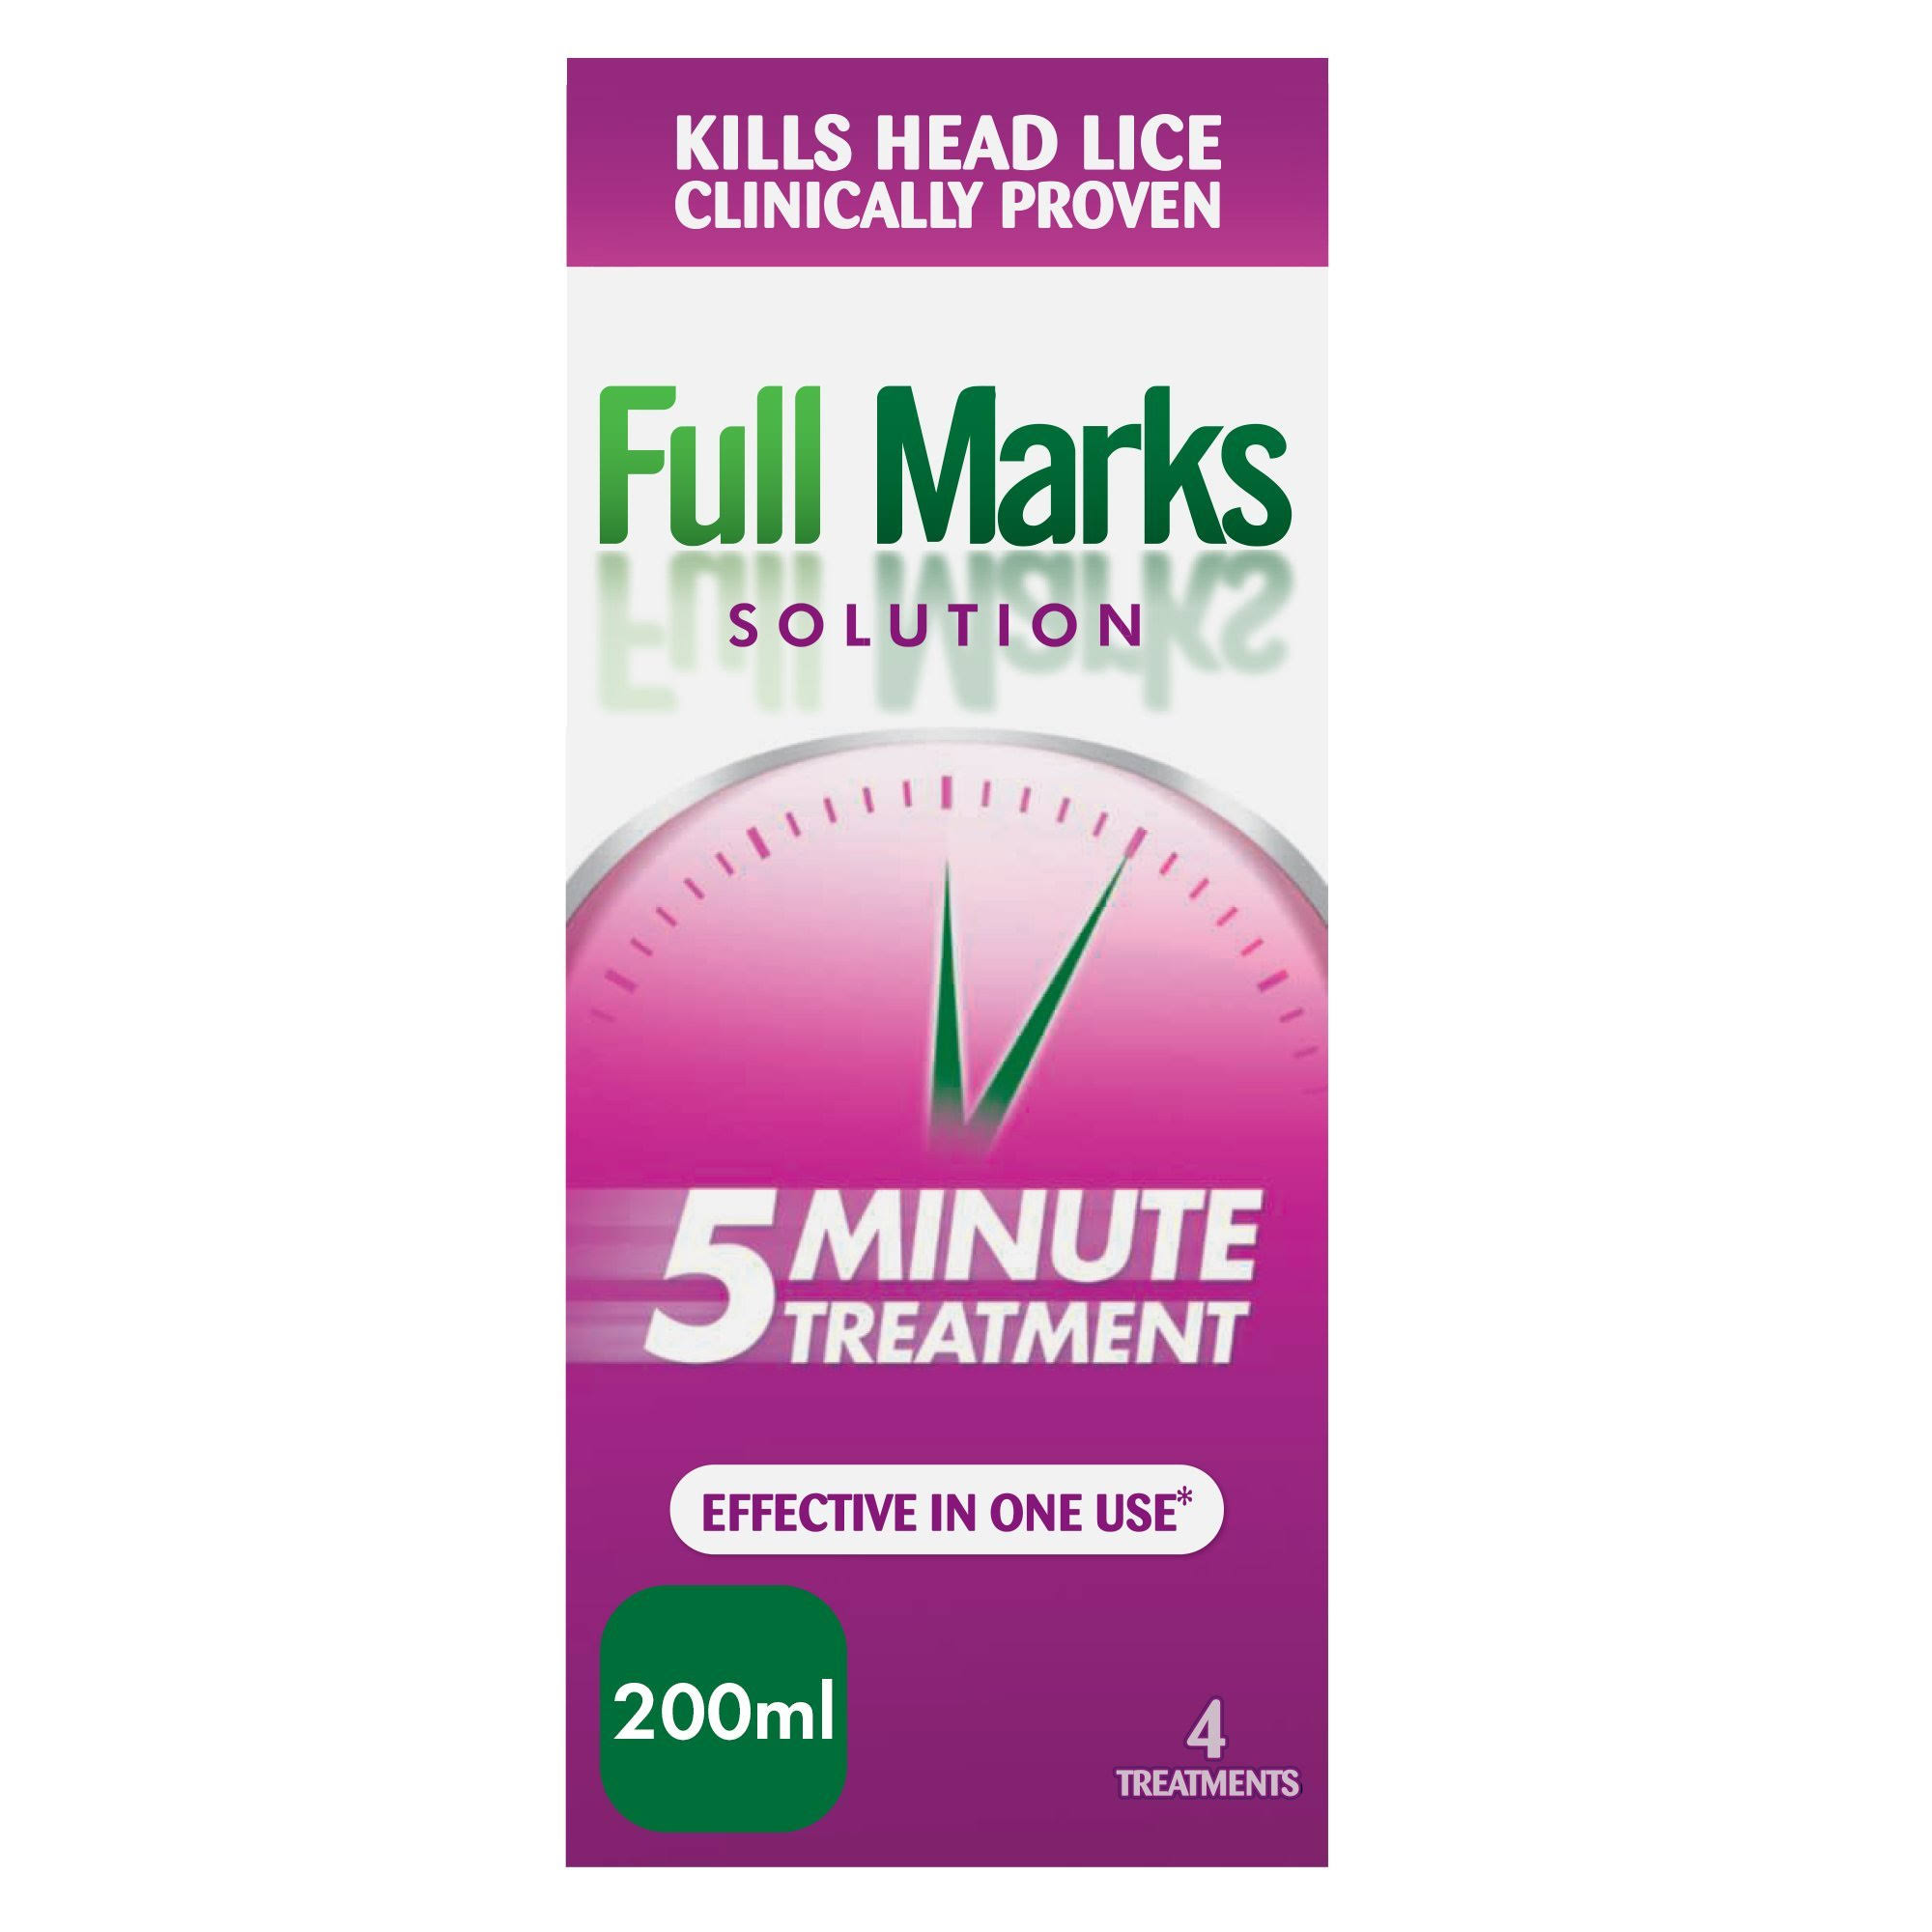 Full Marks Head Lice Solution - 200ml